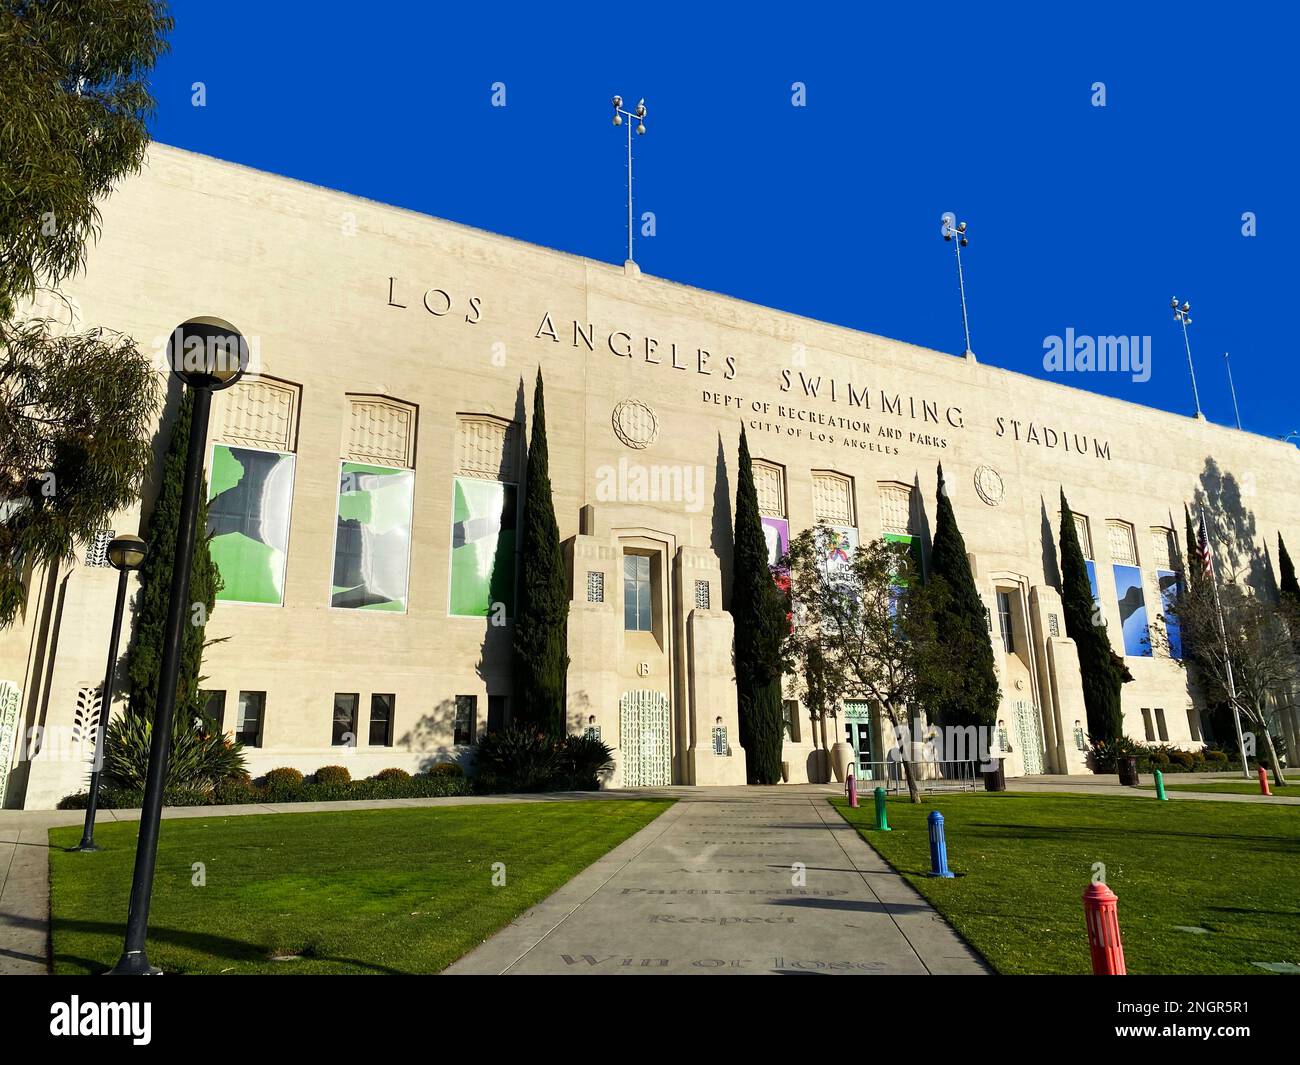 The Los Angeles Swimming Stadium, LA84 Foundation/John C. Argue Swim Stadium Stock Photo